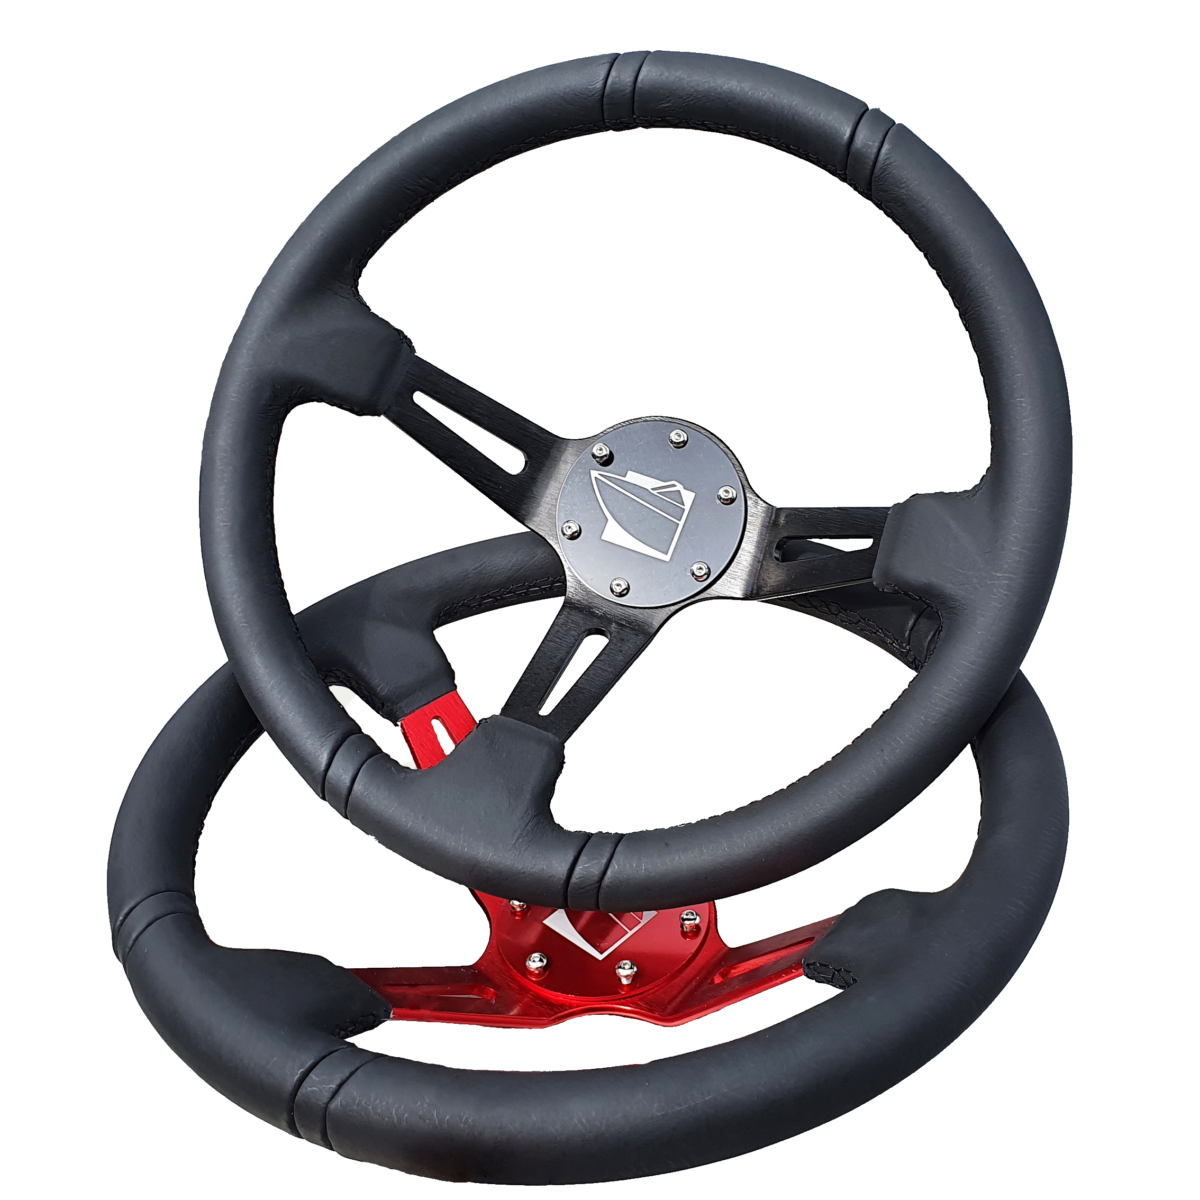 13inch round steering wheel composite image